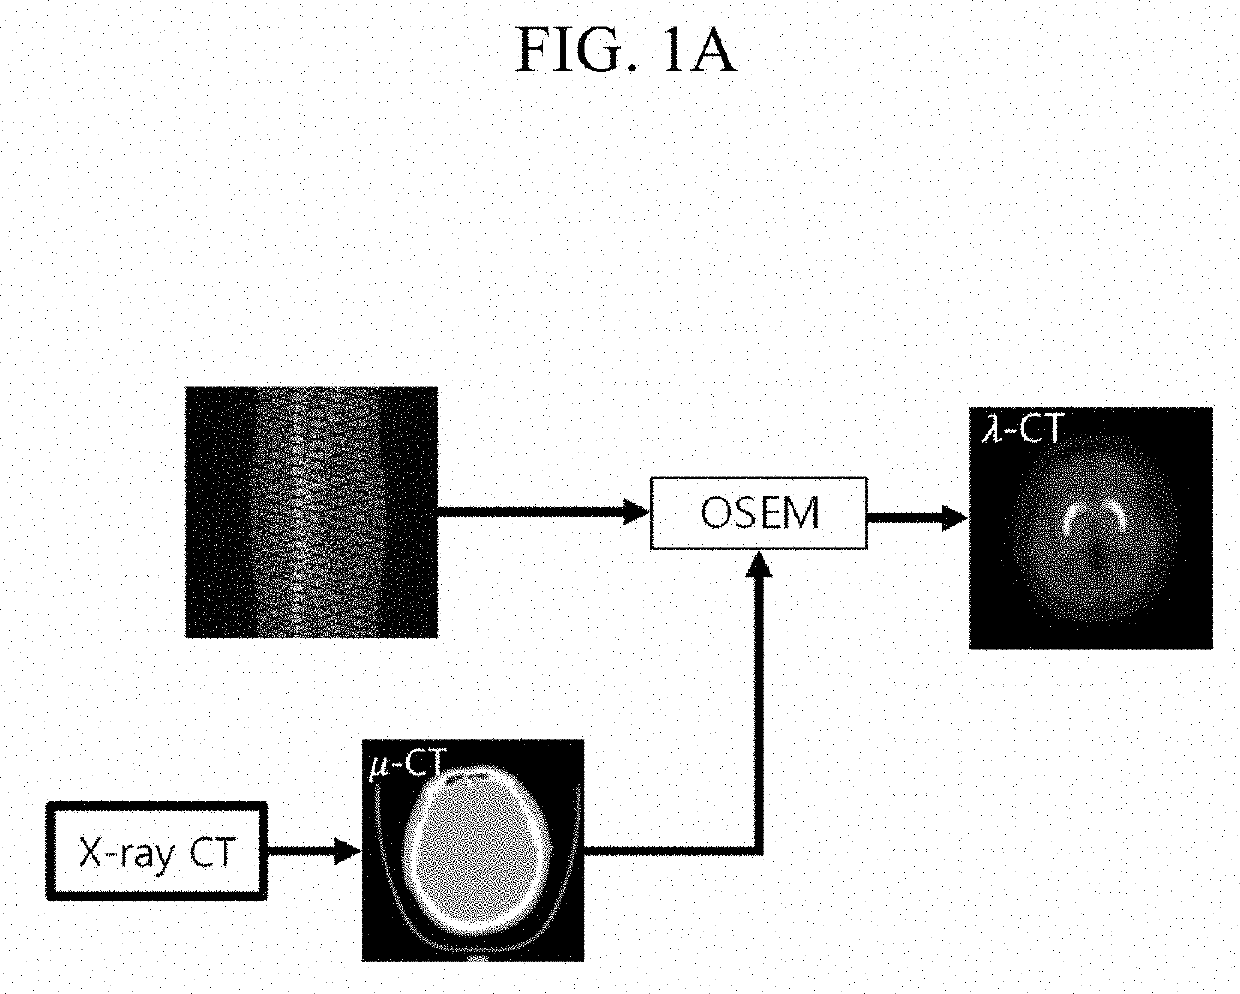 Positron emission tomography system and image reconstruction method using the same